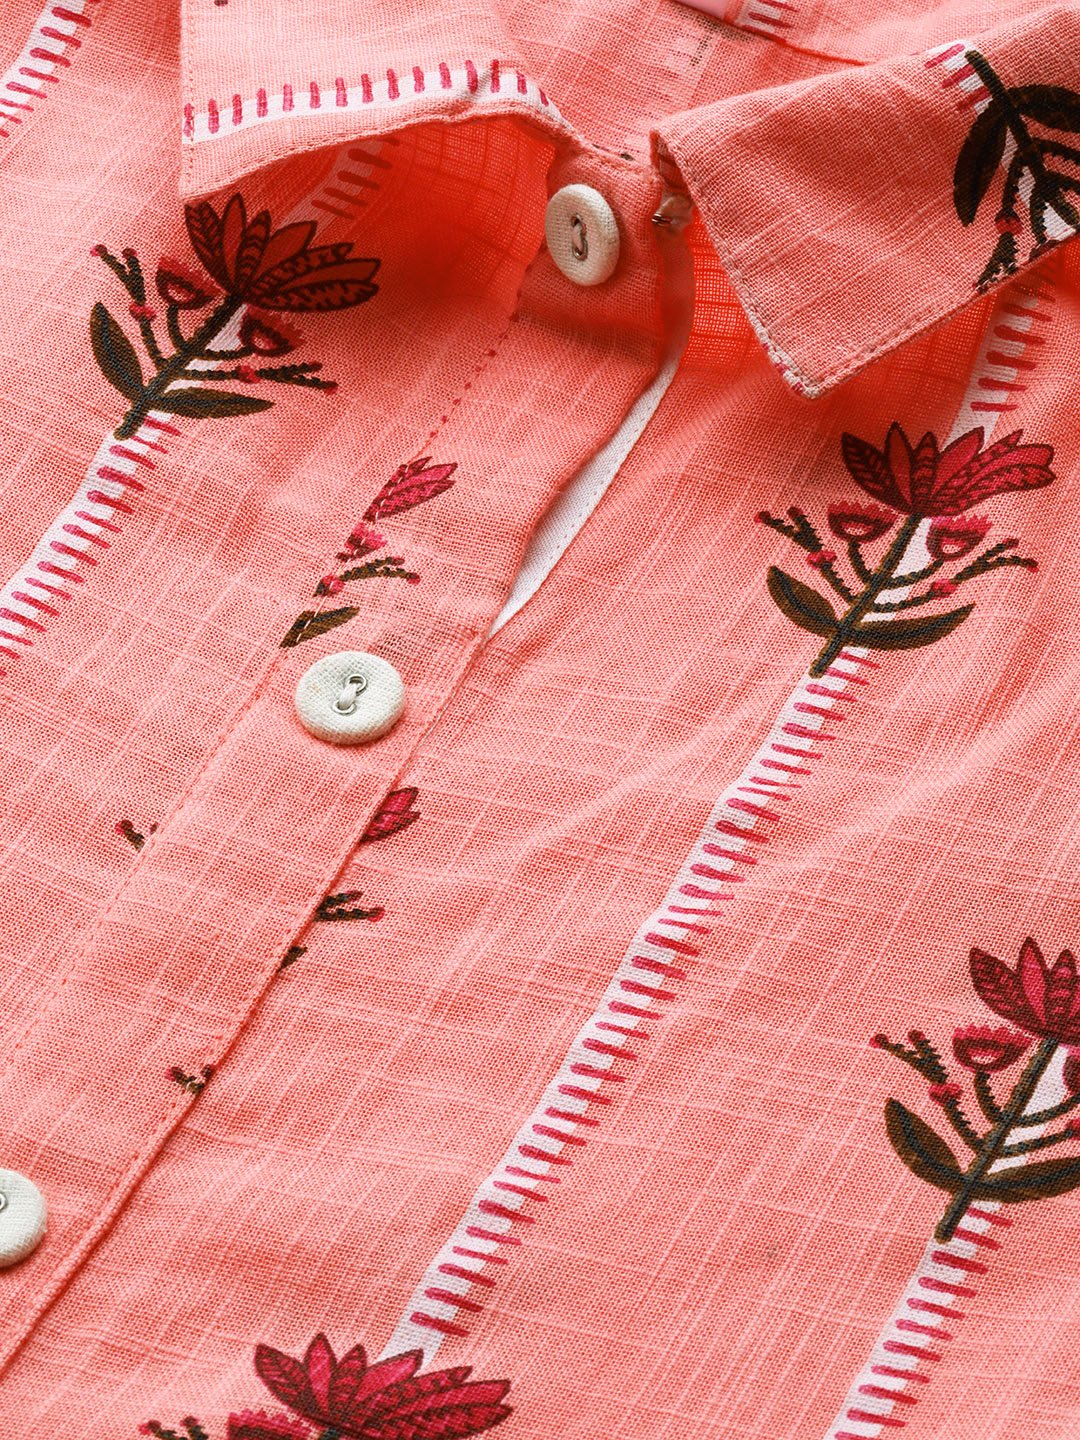 Women's Pink Floral Printed Shirt Collar Cotton Maxi Dress - Nayo Clothing